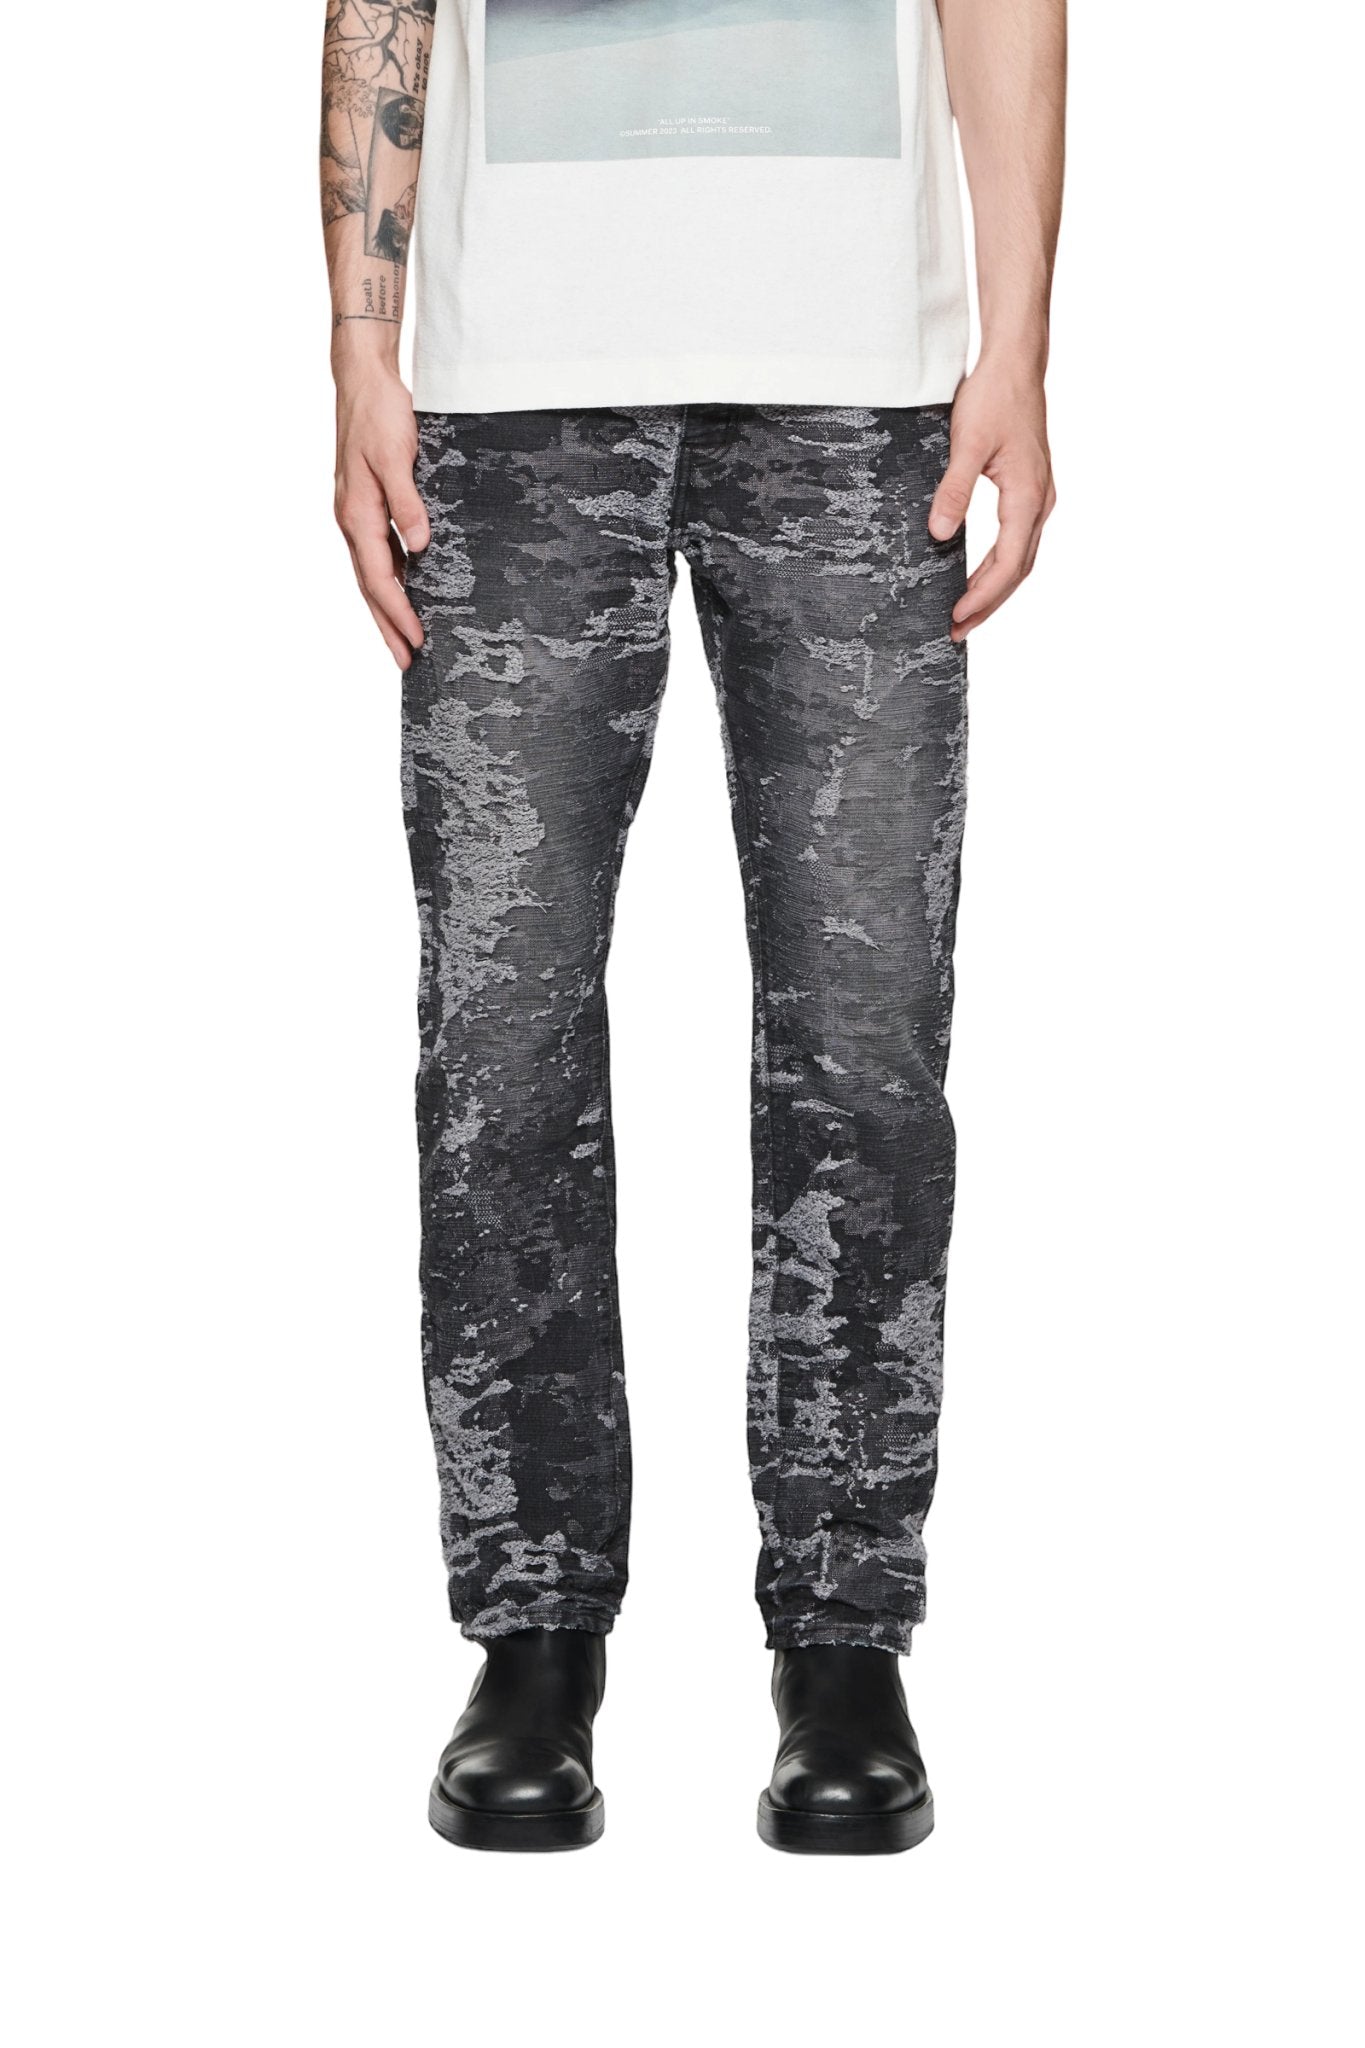 Purple Brand Jeans Men Slim Straight Mid Rise Blue P005 $295 Size